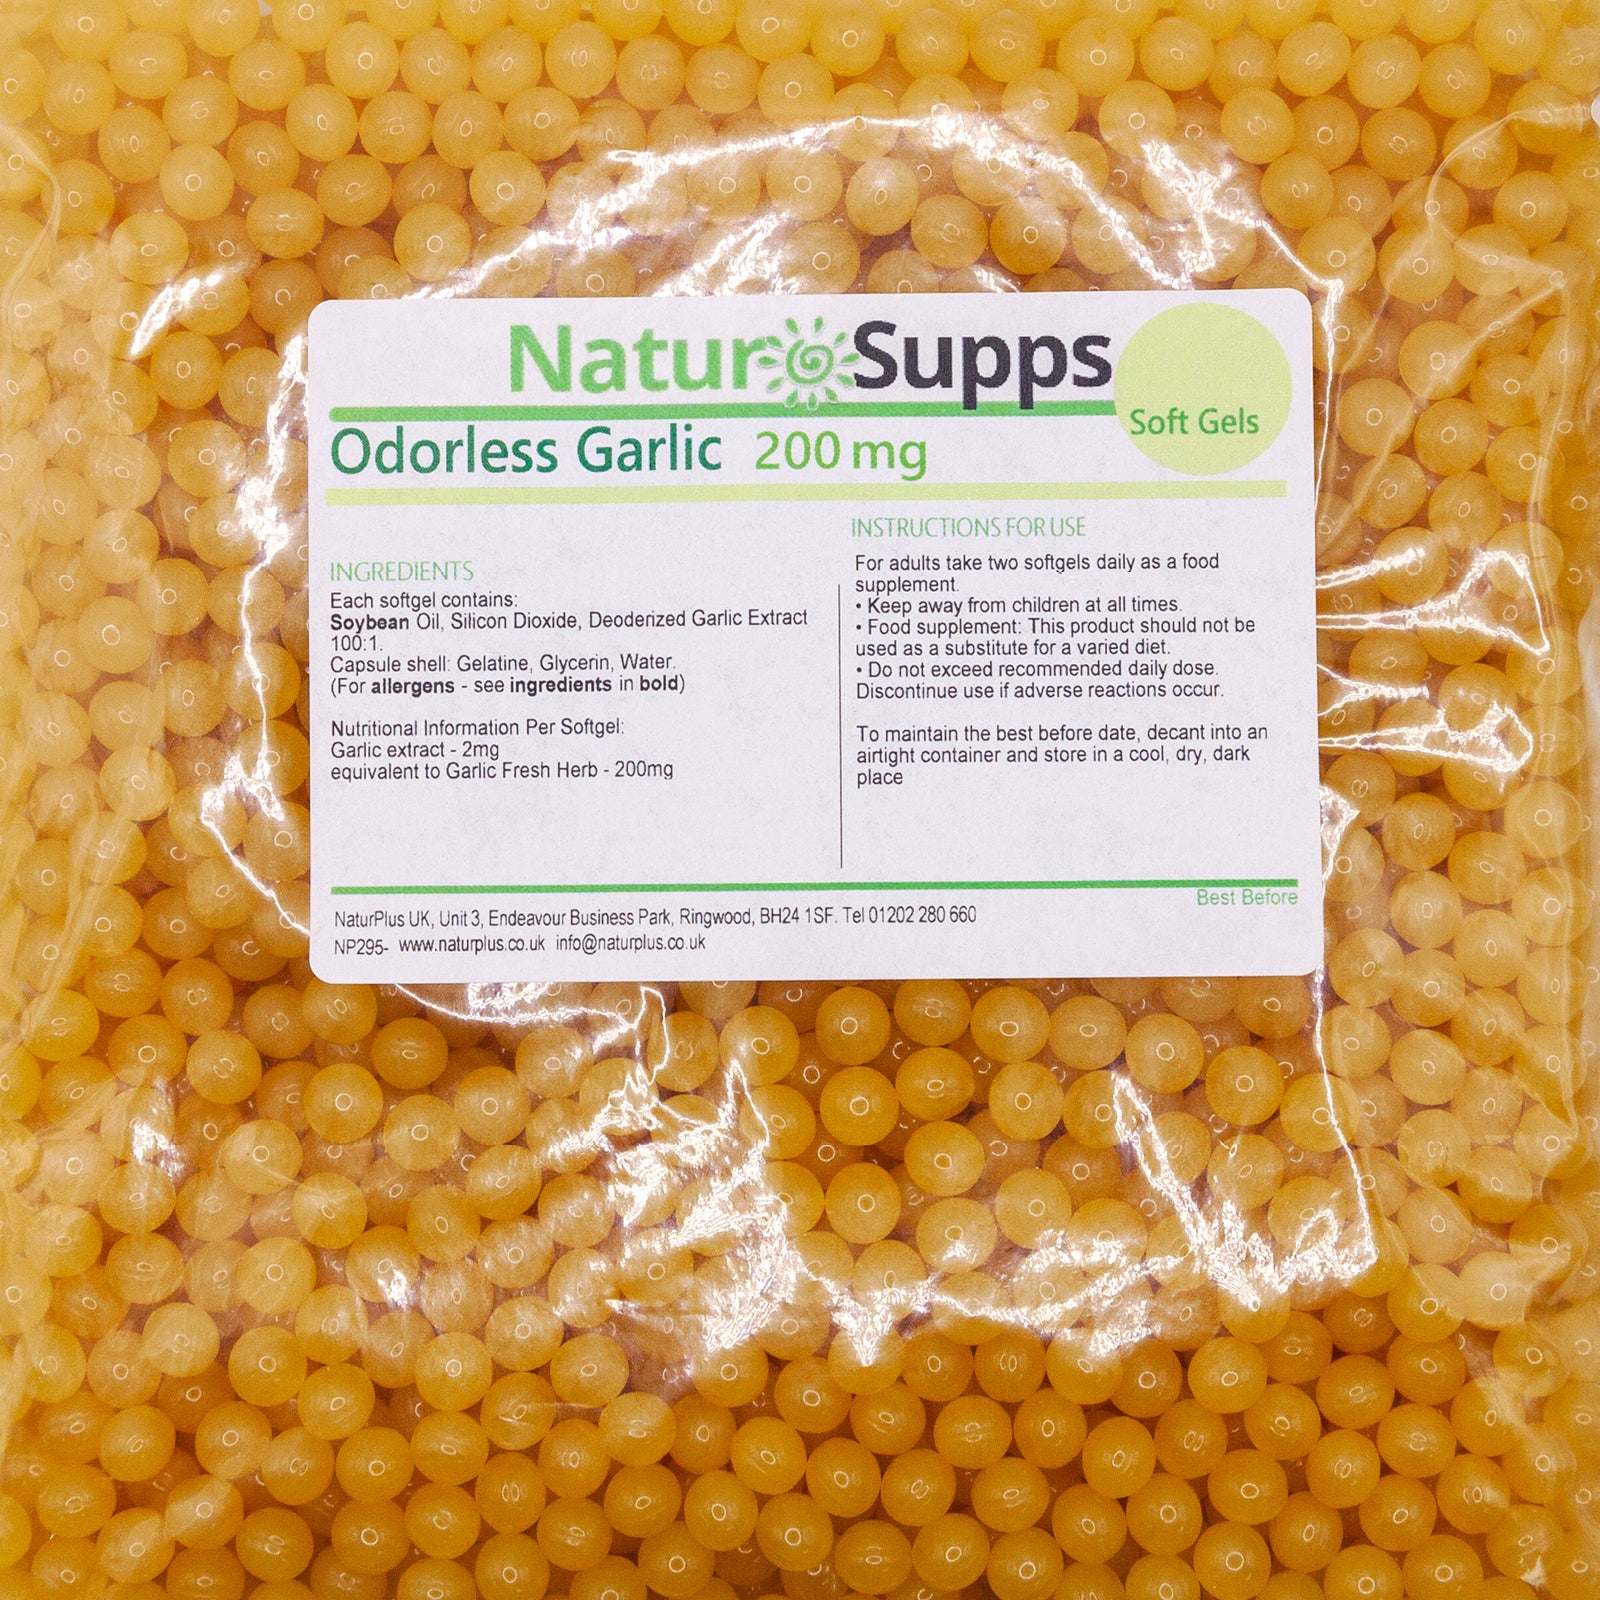 Odourless Garlic Capsules 200mg High Absorption Odourless Garlic Supplements